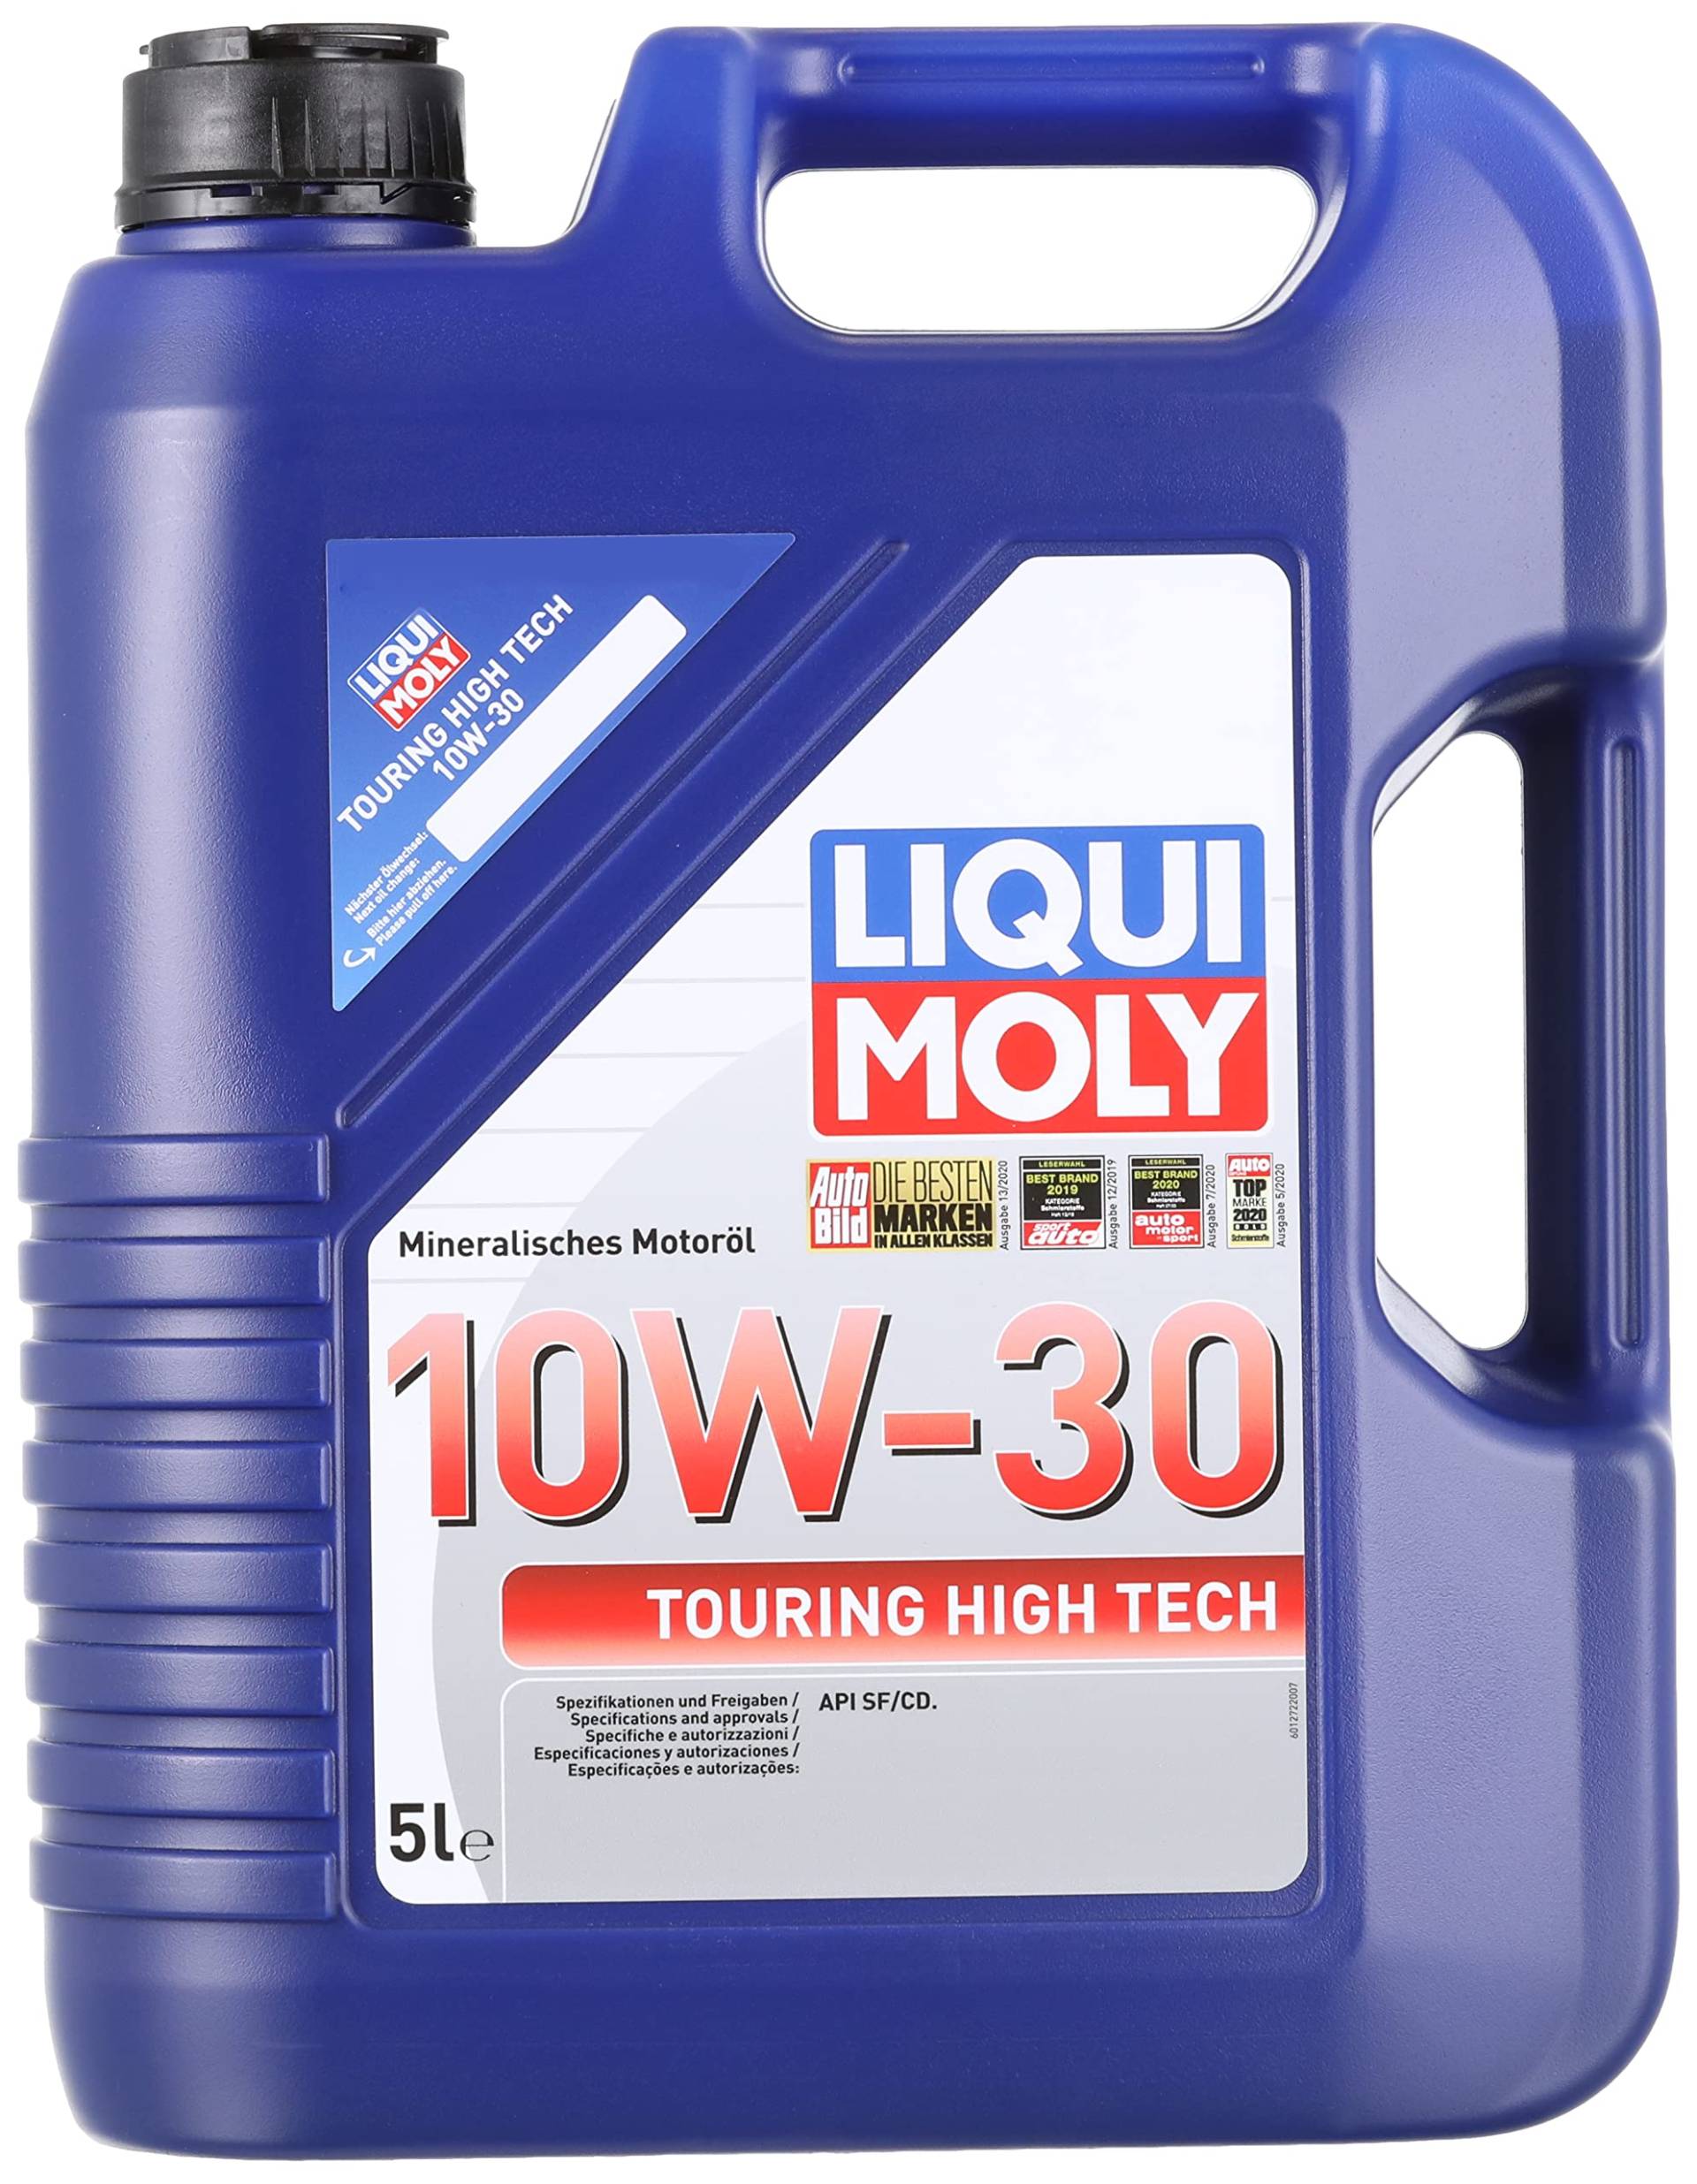 LIQUI MOLY Touring High Tech 10W-30 | 5 L | mineralisches Motoröl | Art.-Nr.: 1272 von Liqui Moly